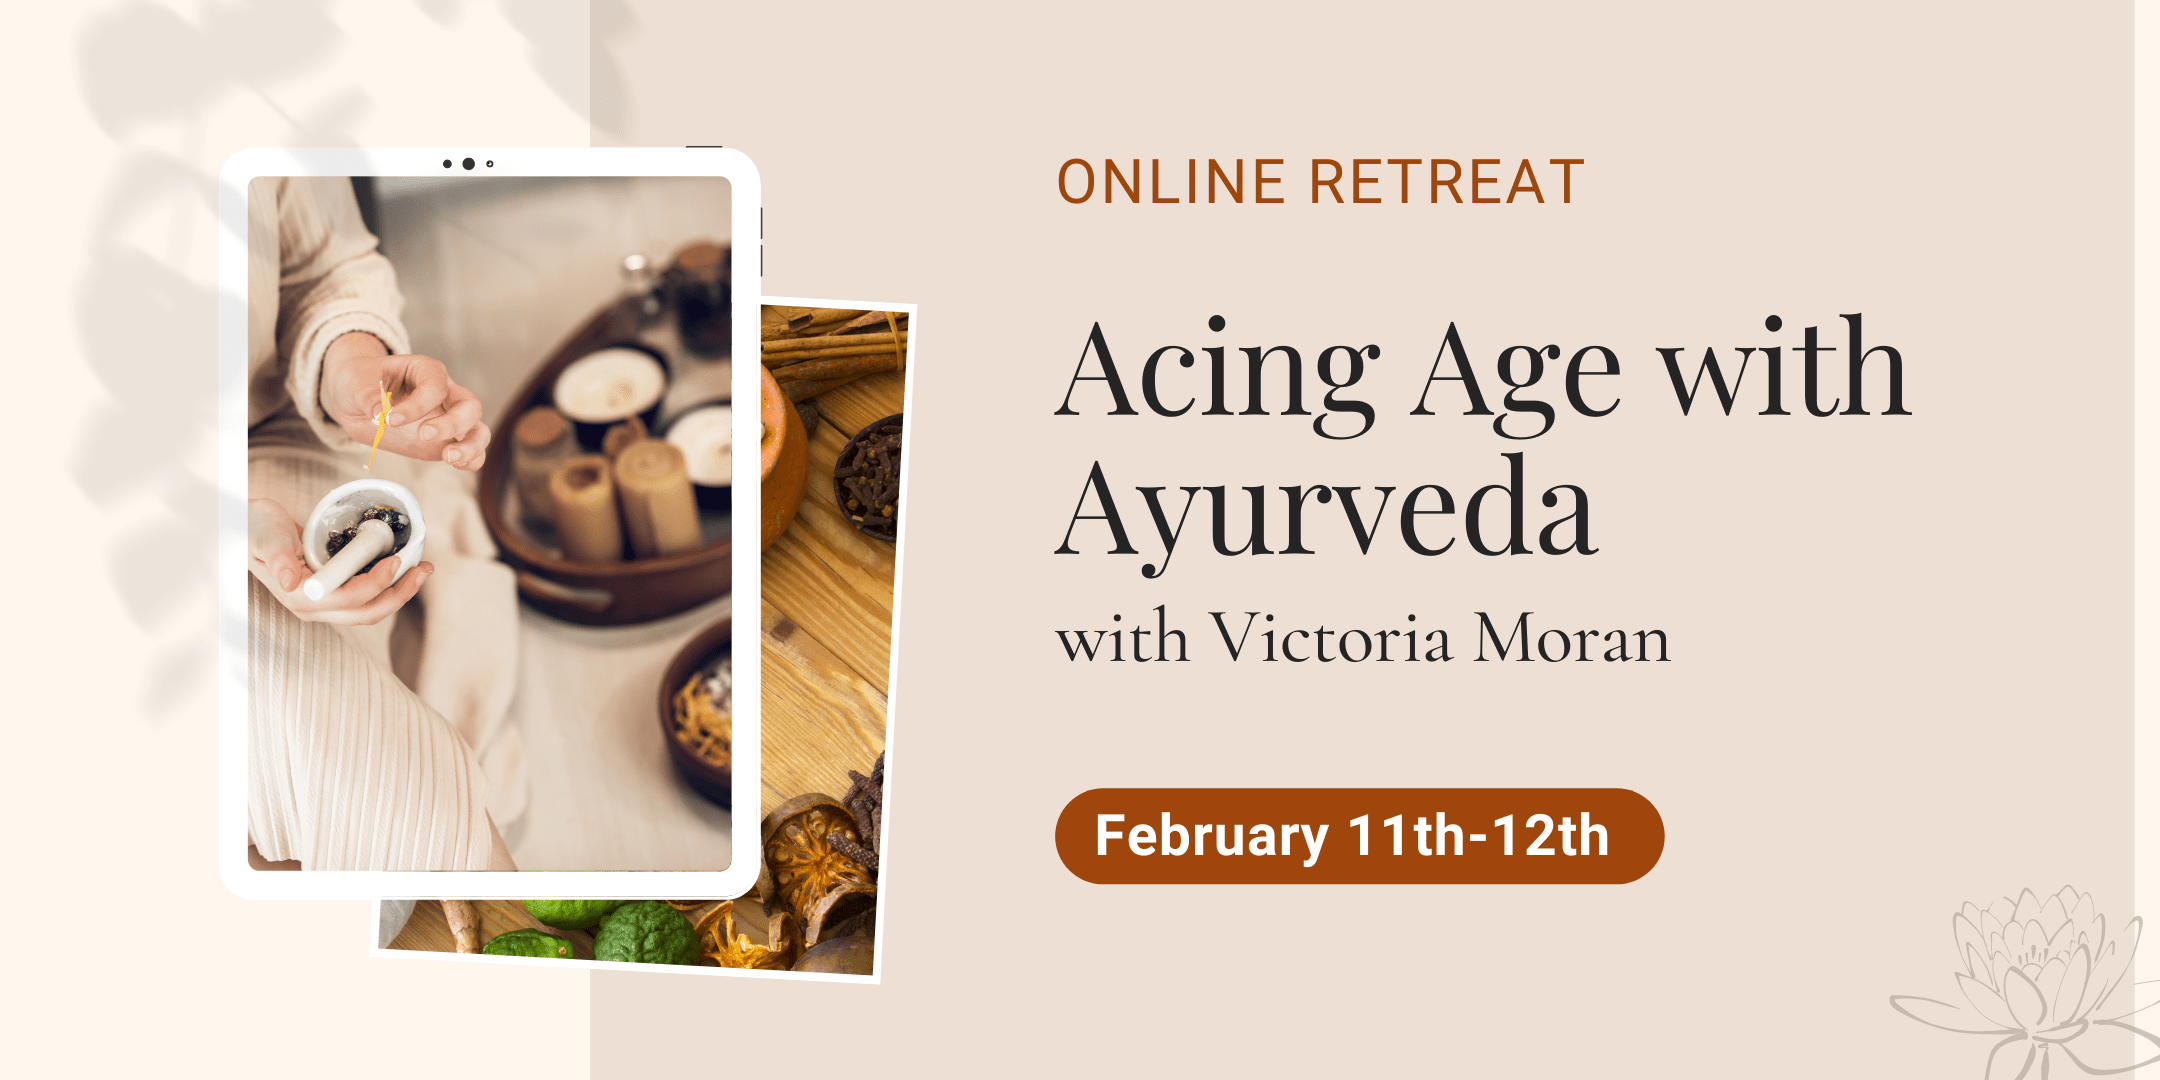 Acing Age with Ayurveda